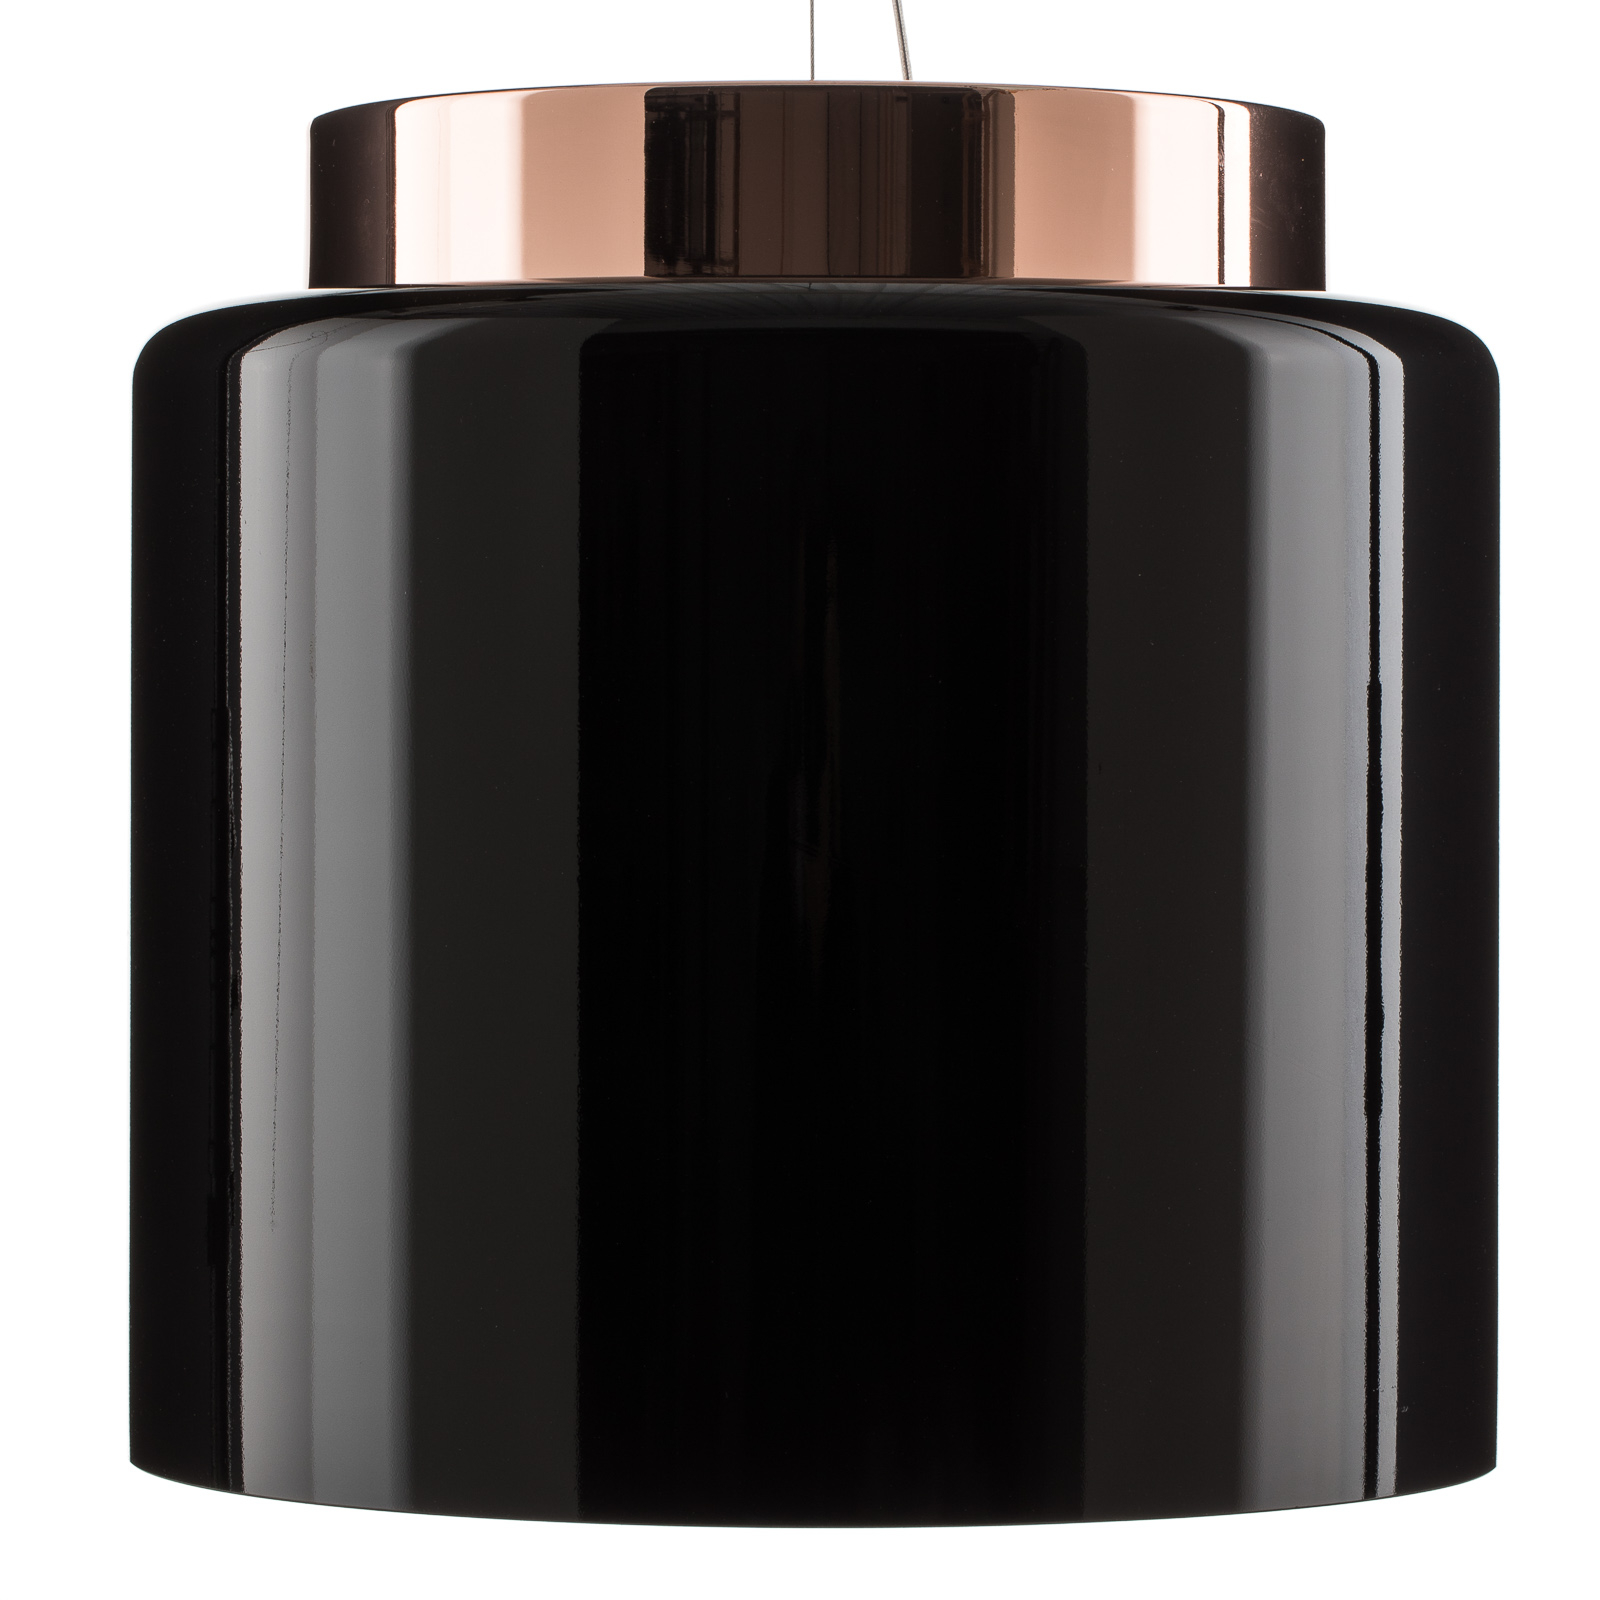 Prandina Segesta S5 pendant copper/lampshade black